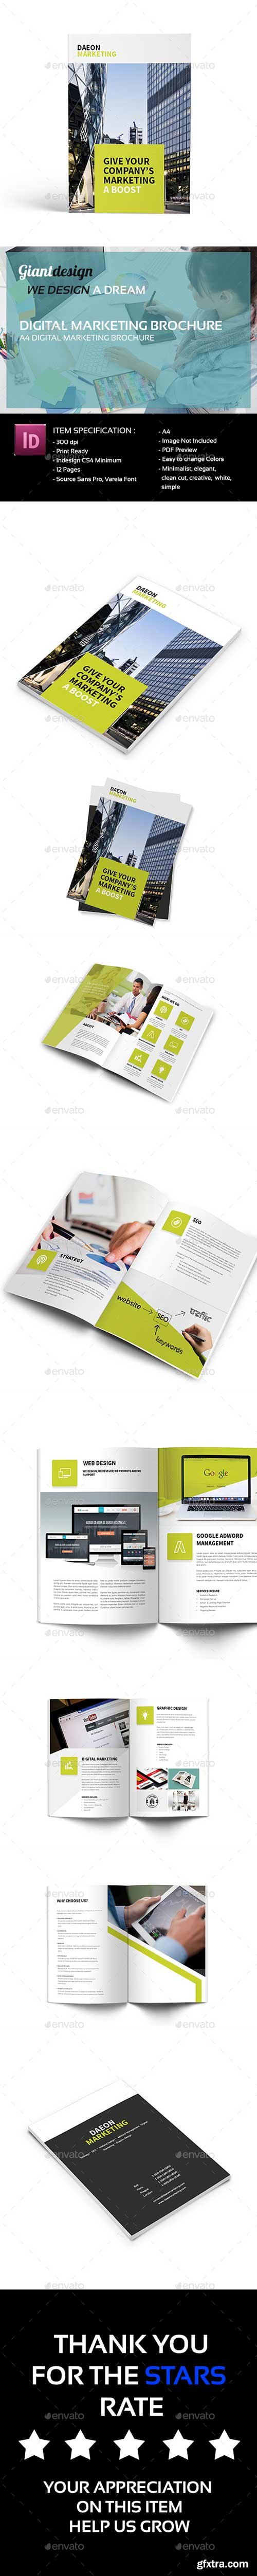 Graphicriver - Digital Marketing Brochure 20281969